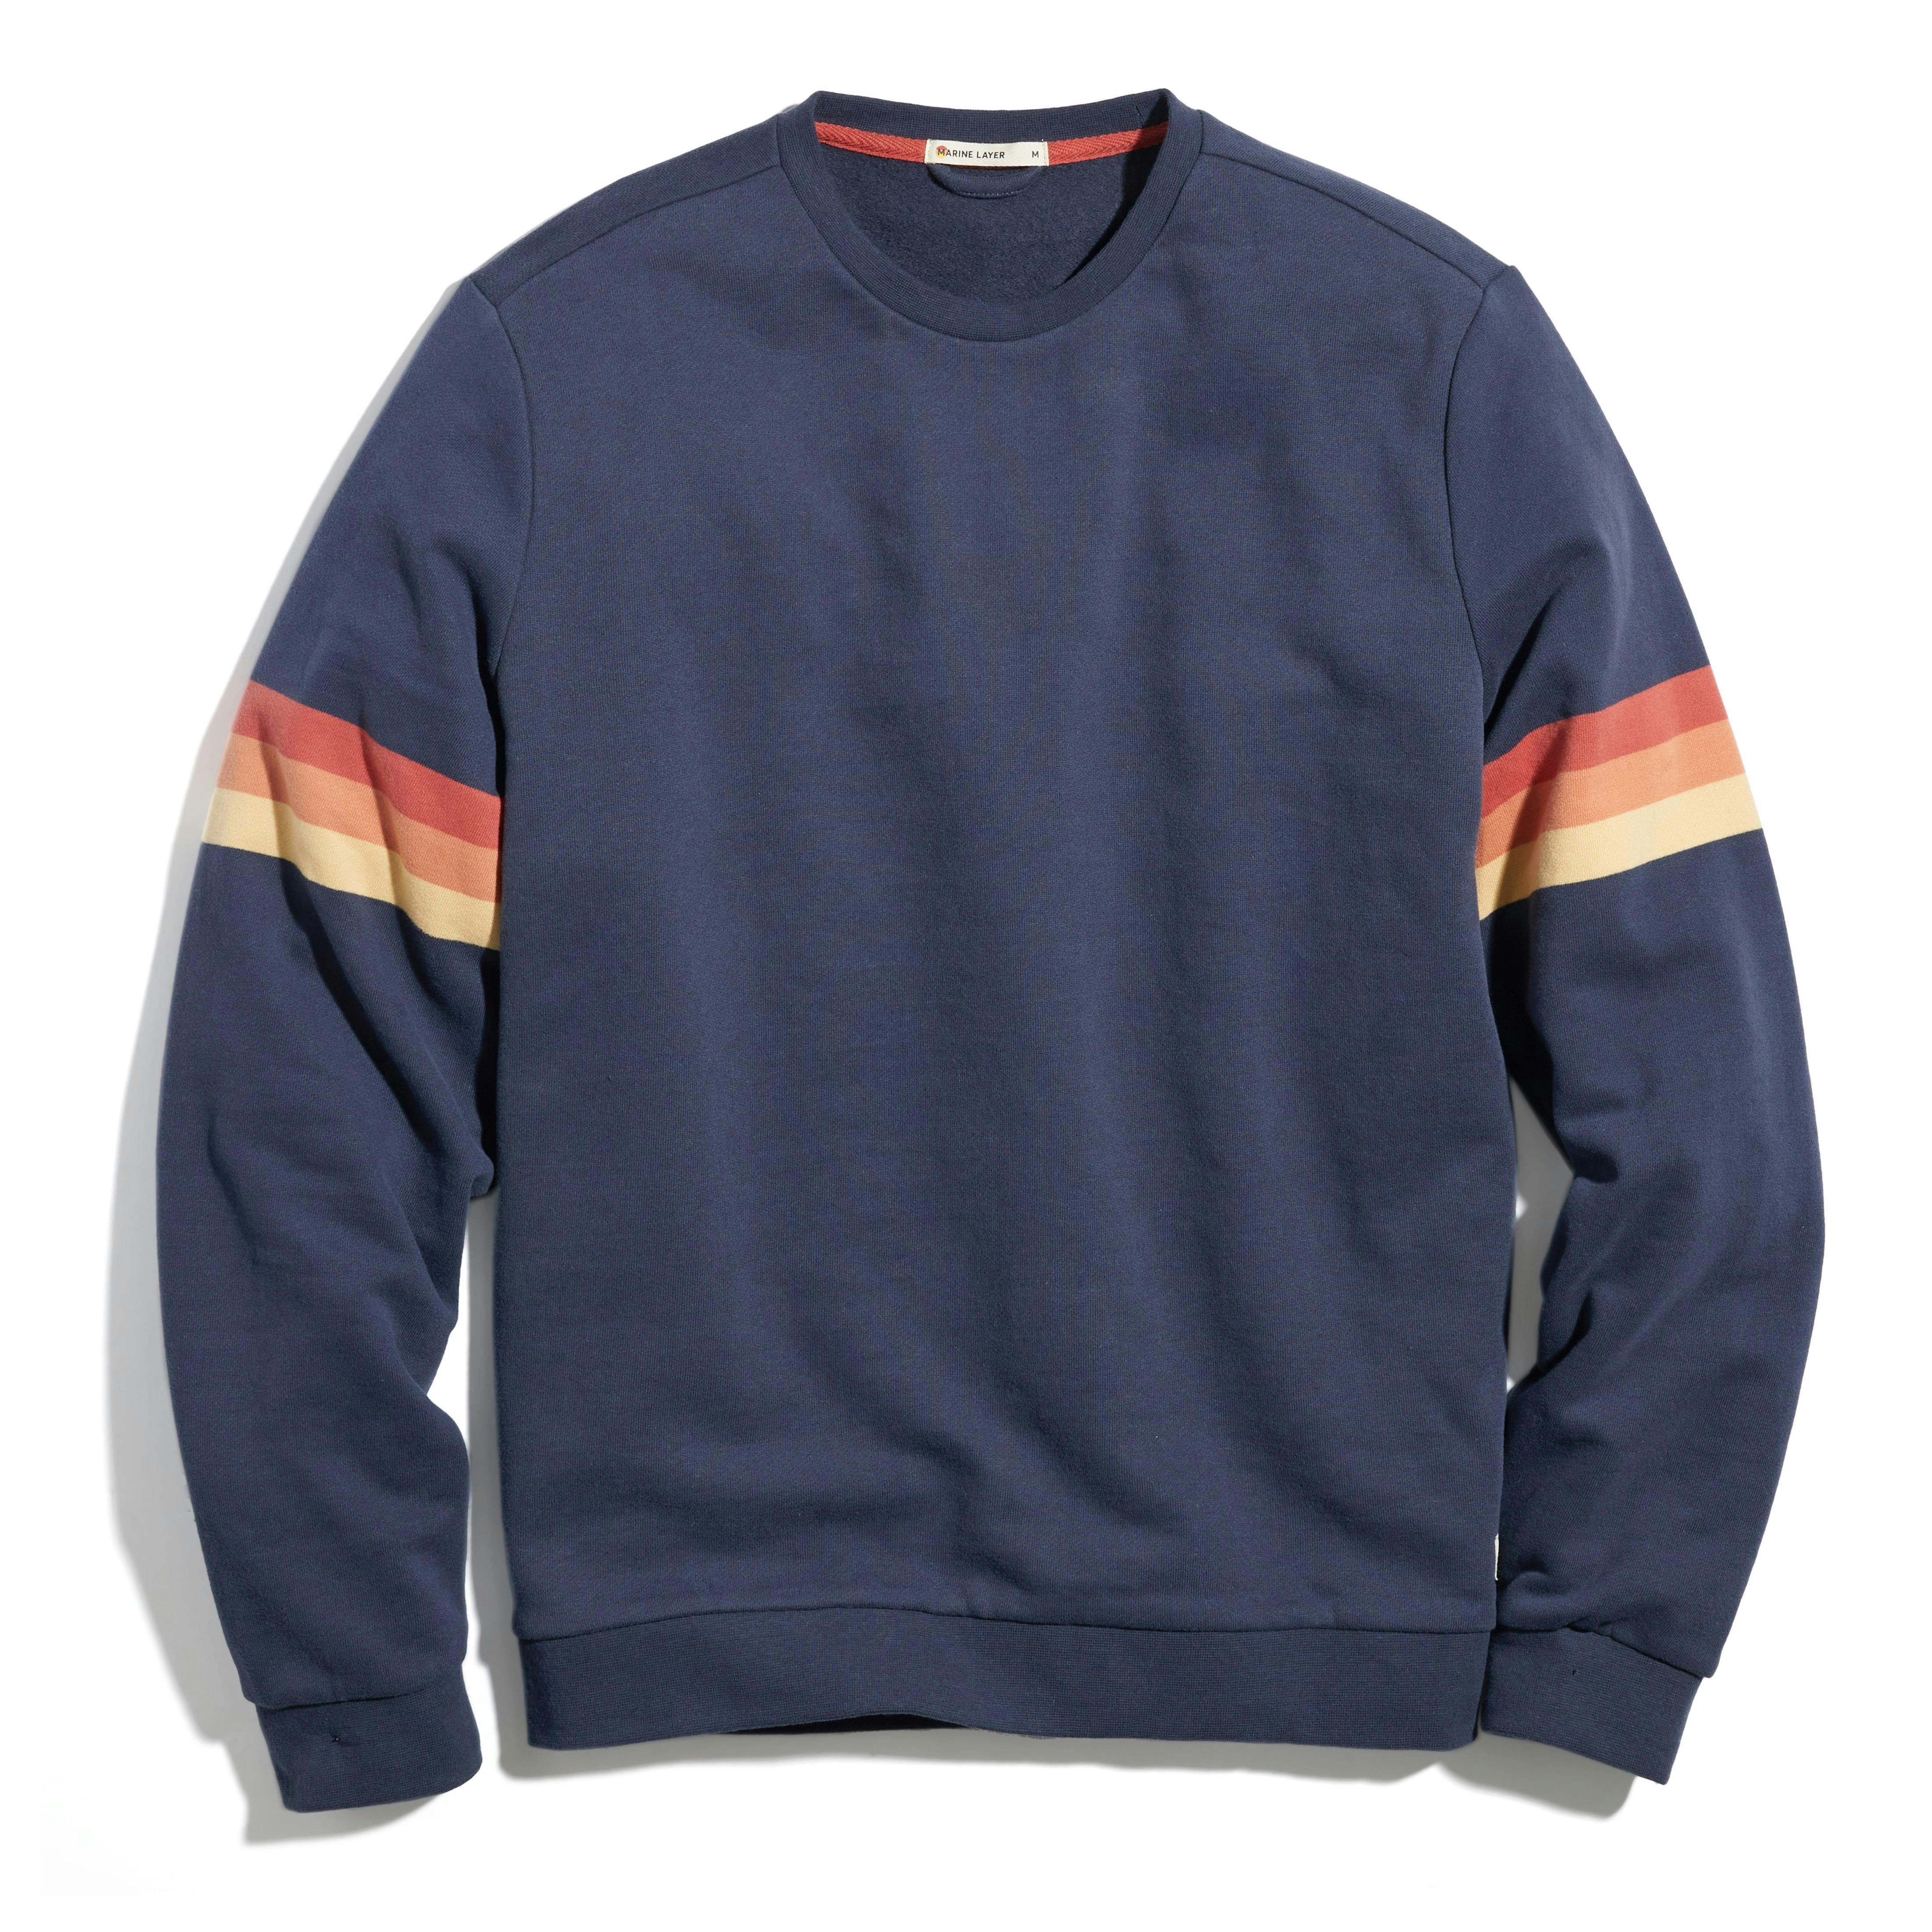 Colorblocked Sweatshirt